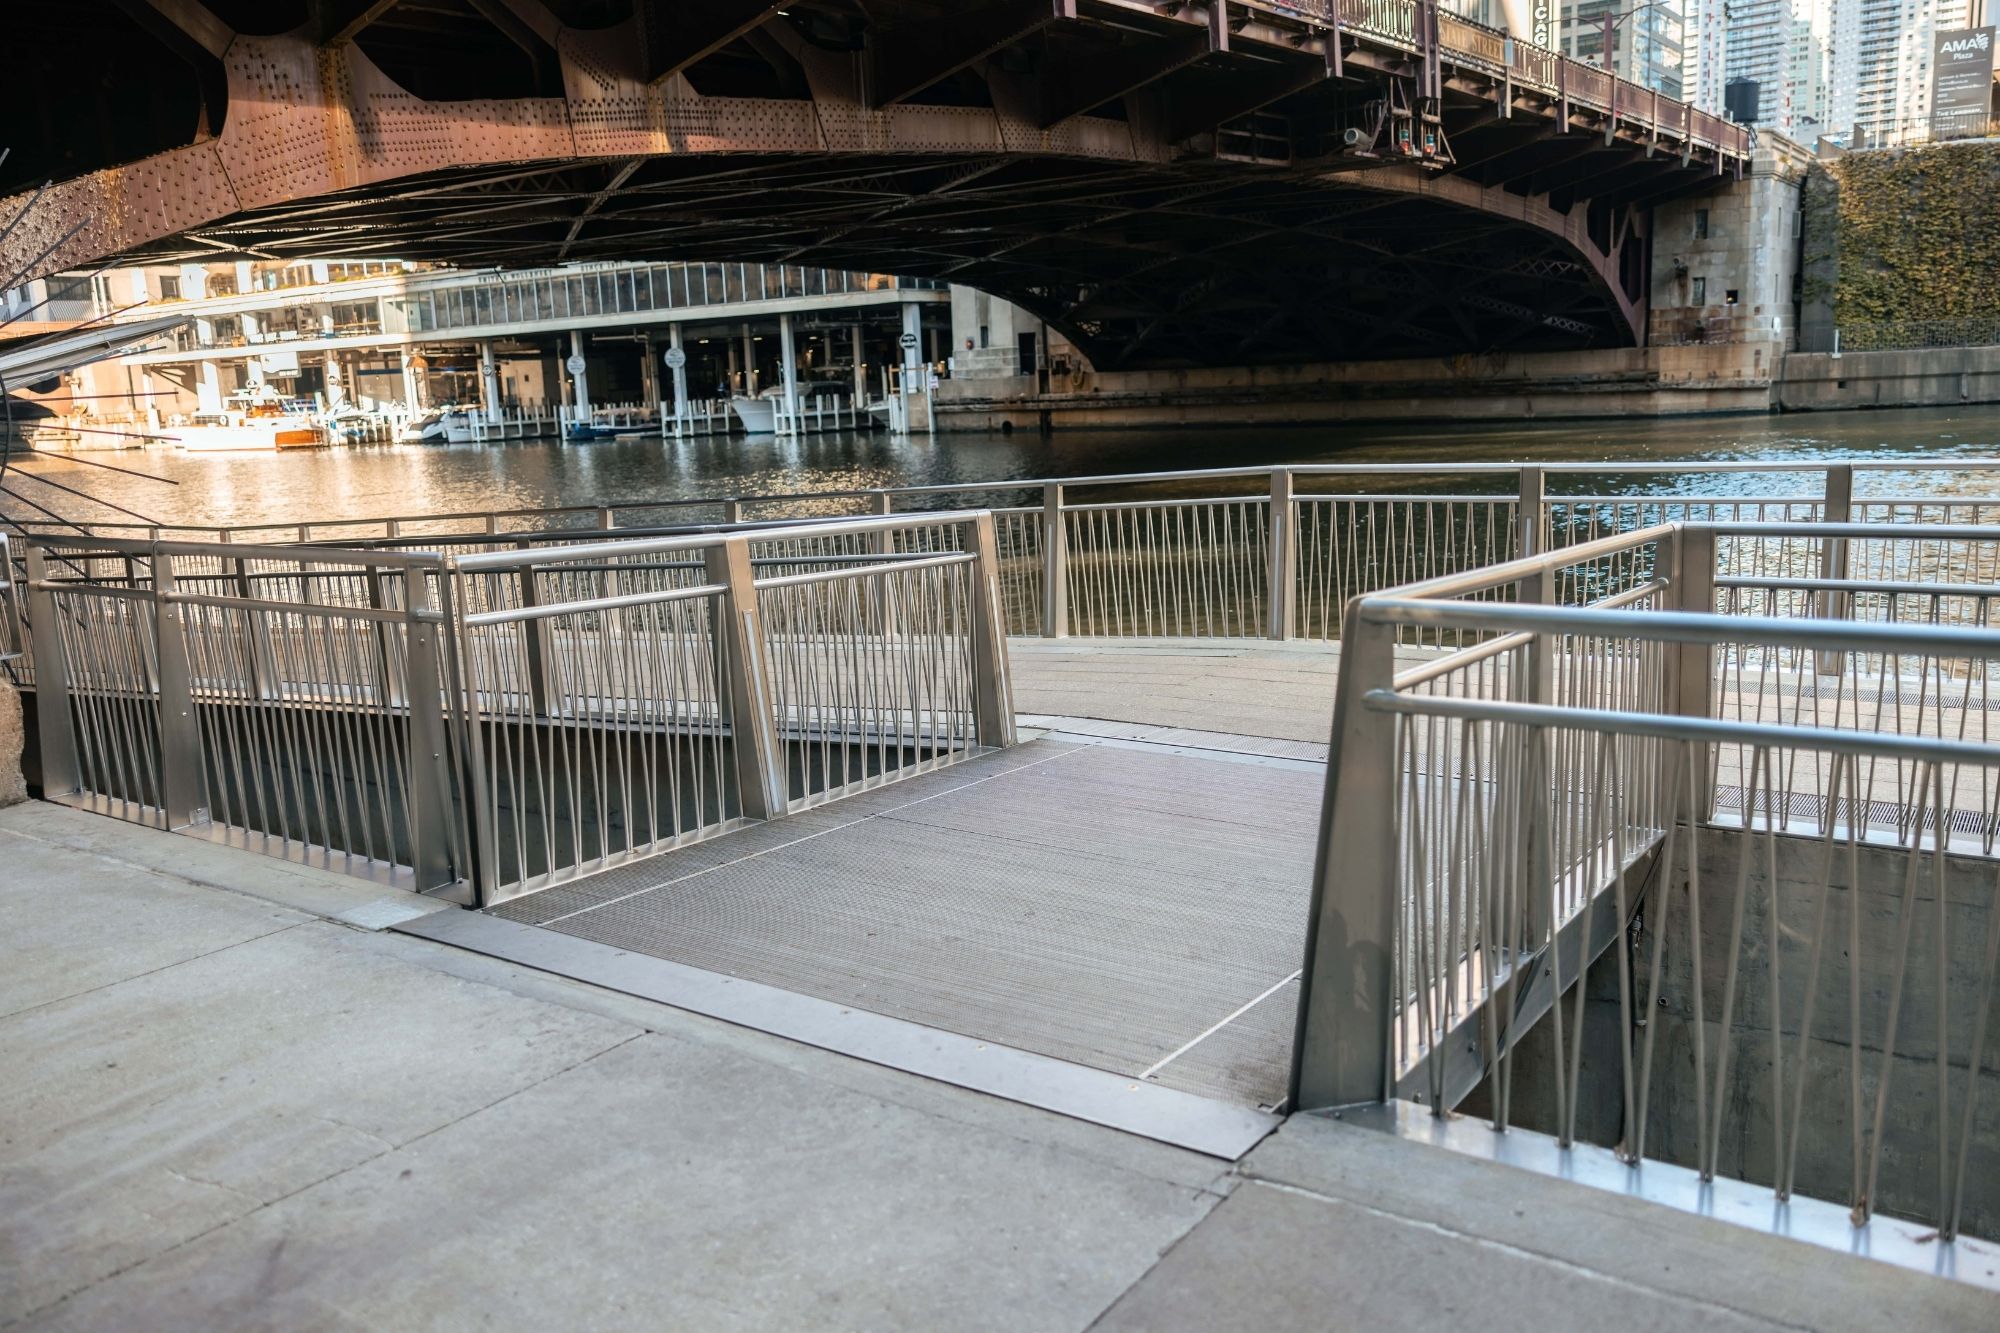 Wheels n' Heels product featured on a short pedestrian bridge along Chicago's riverwalk